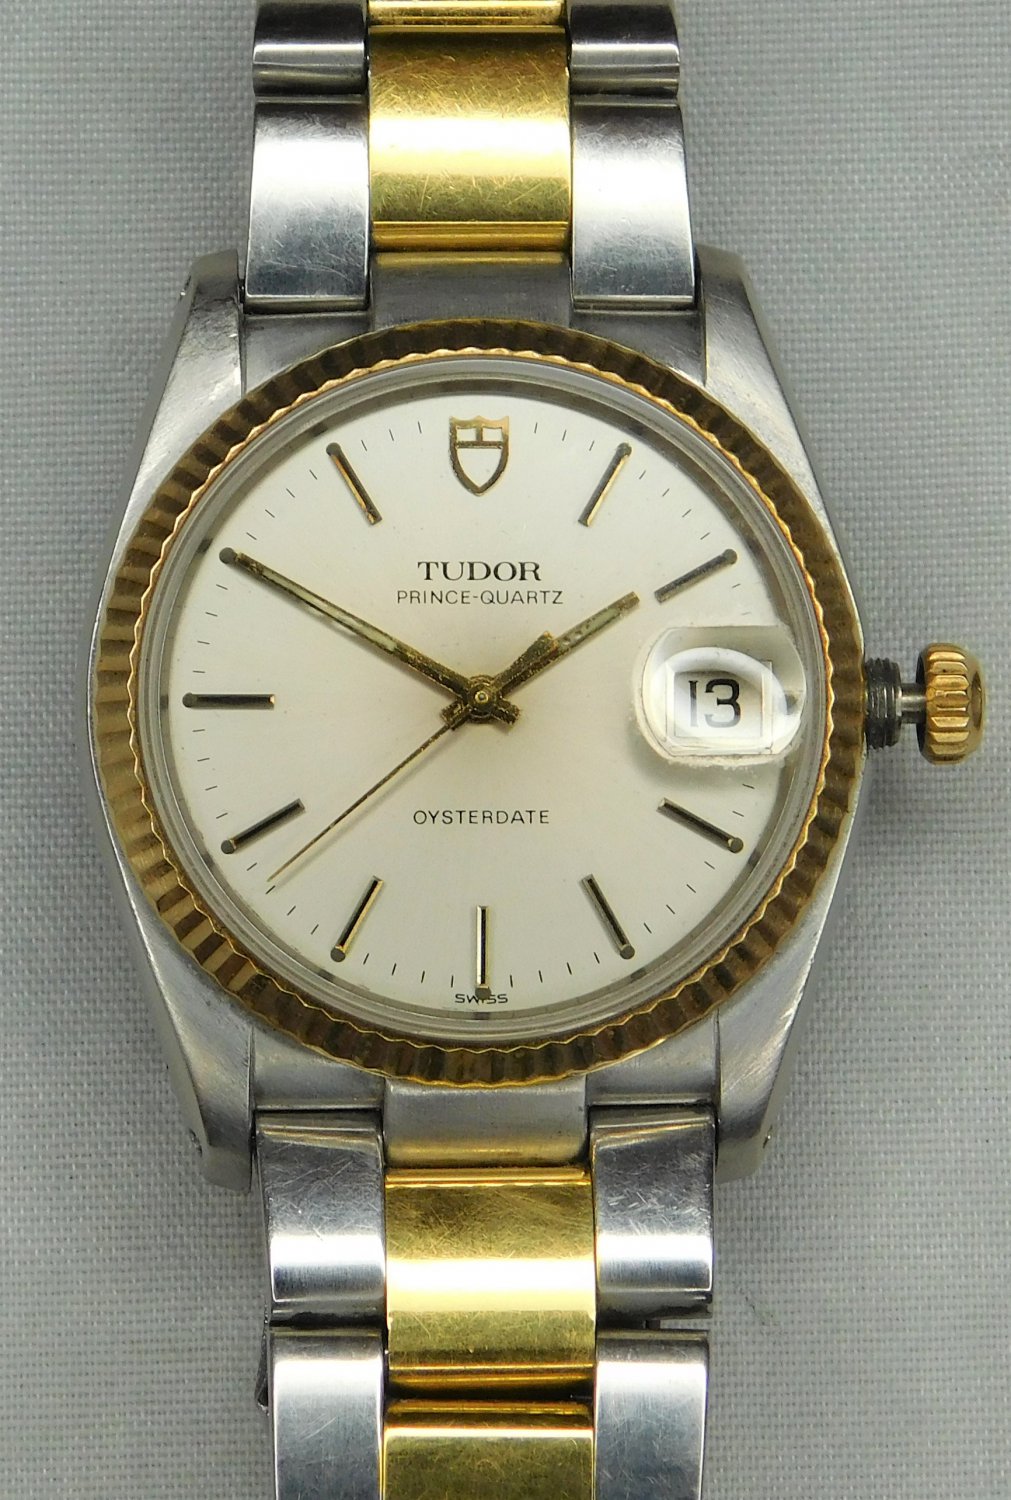 Rolex Tudor Prince-Quartz Oysterdate "Rare Bird" Vintage 1985 Mens Watch....34mm